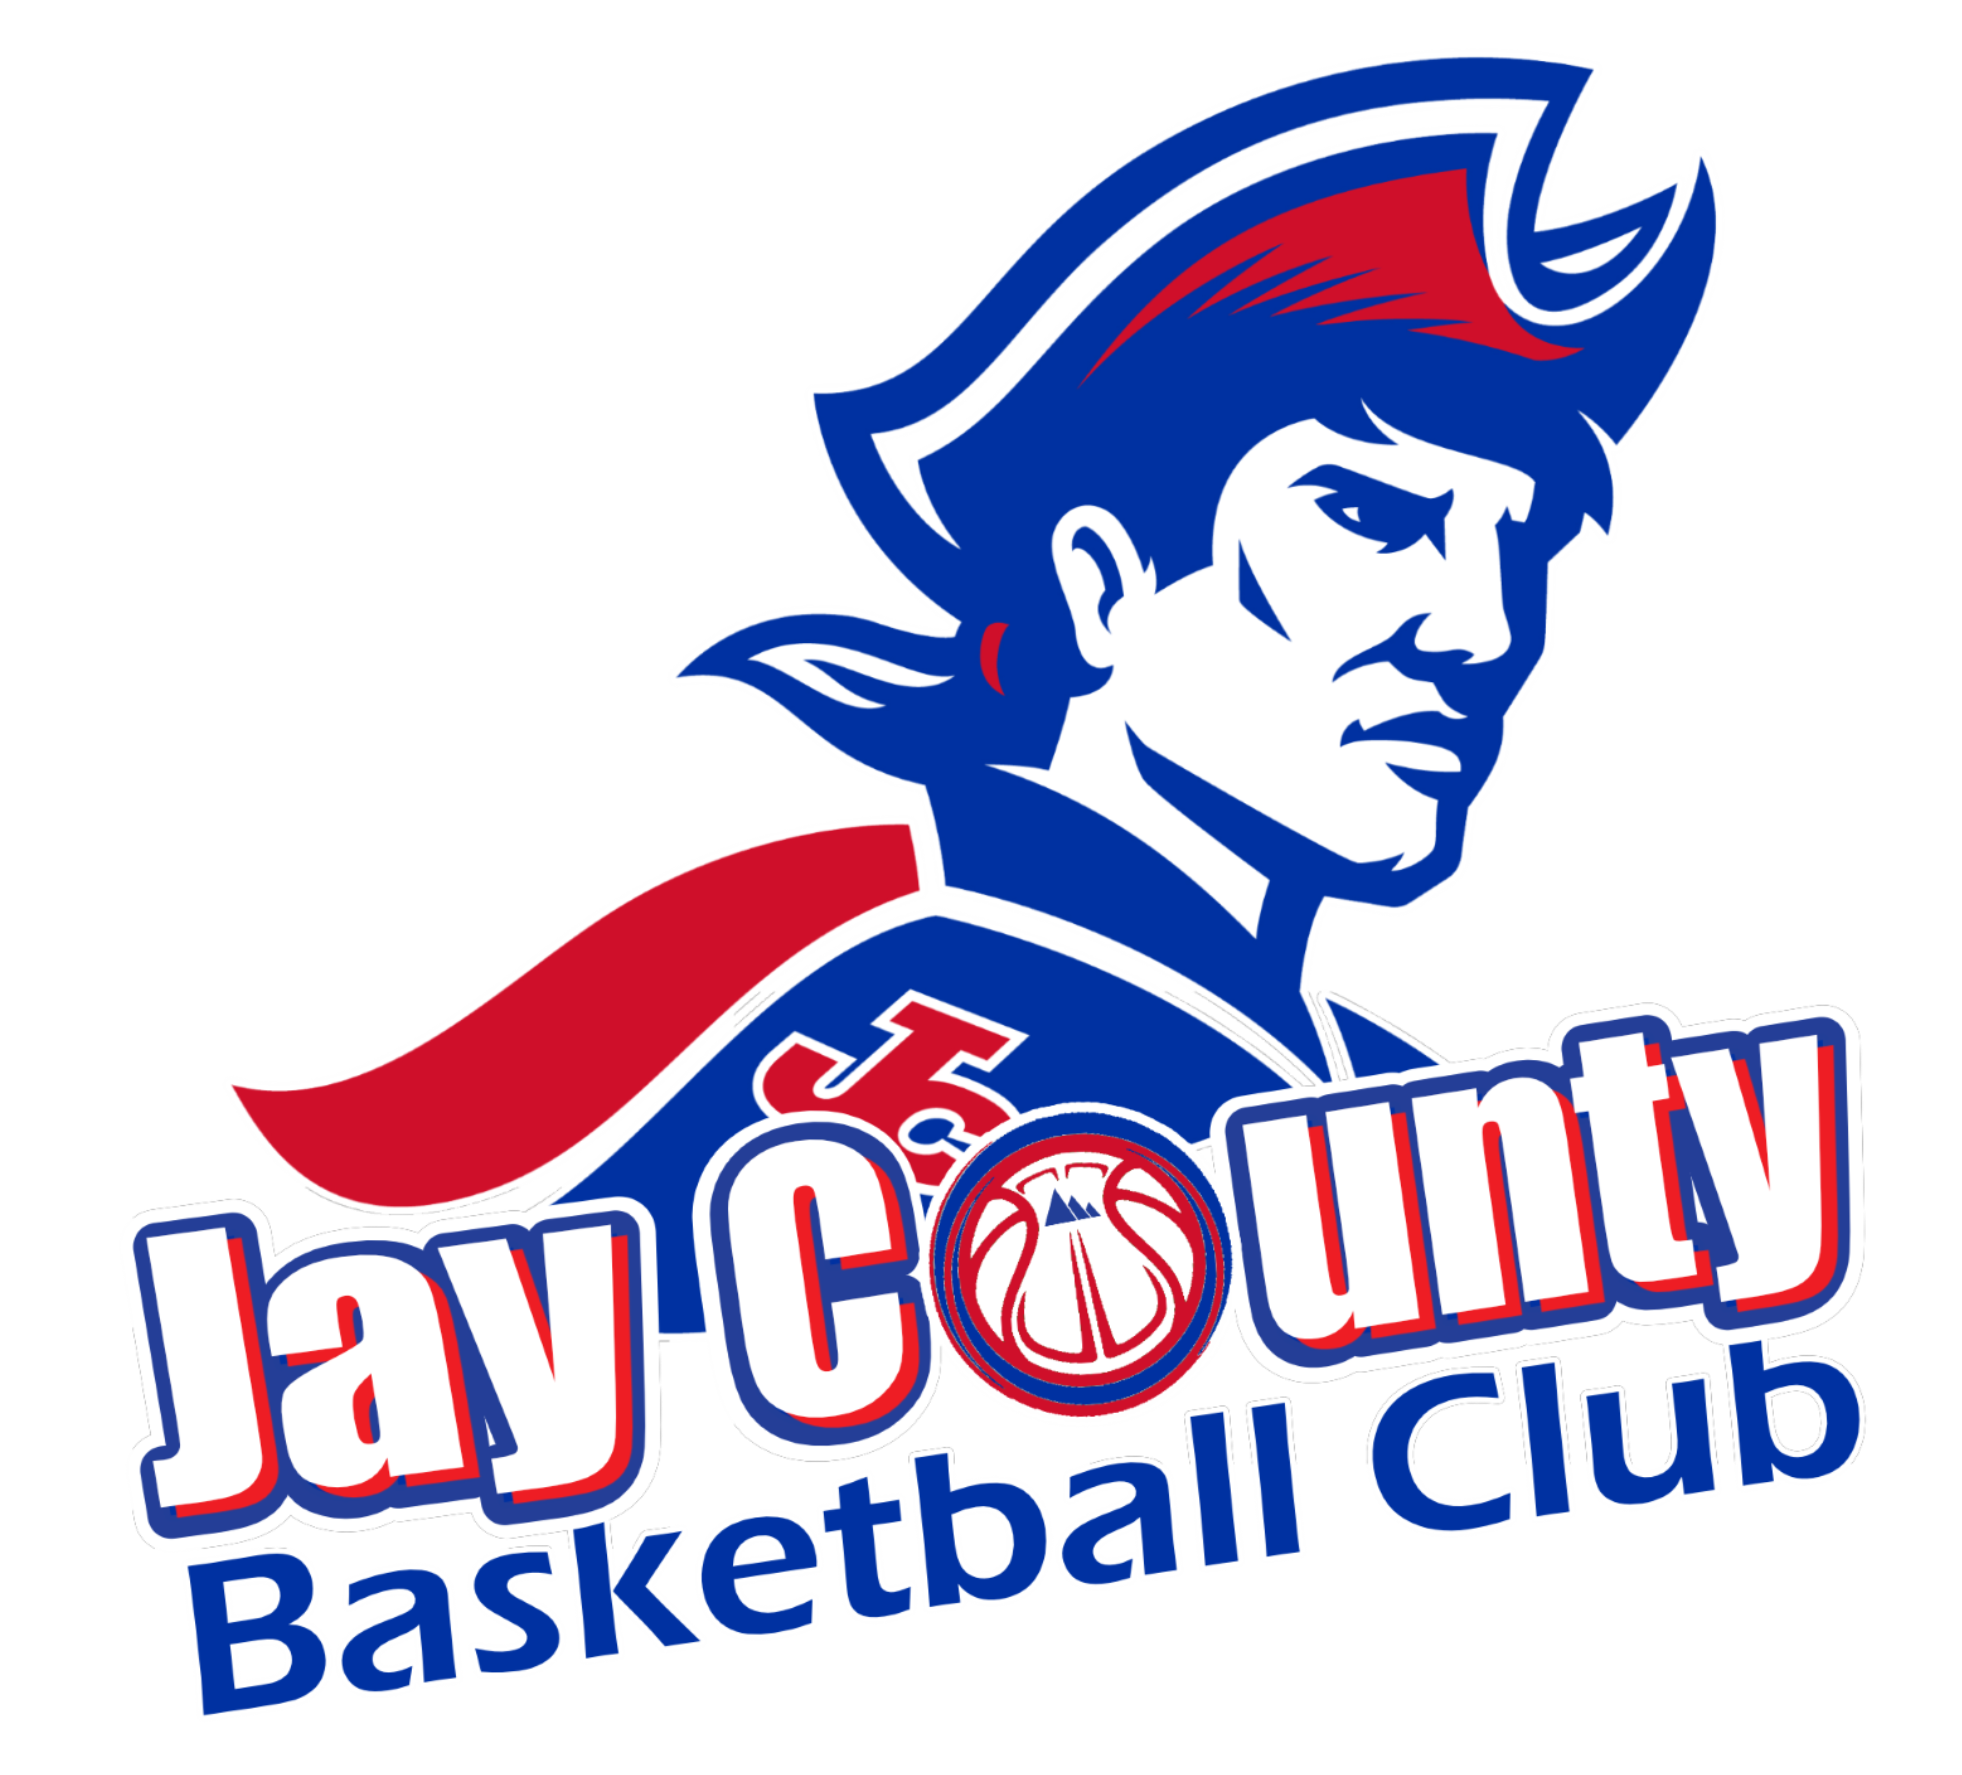 Jay County Basketball Club